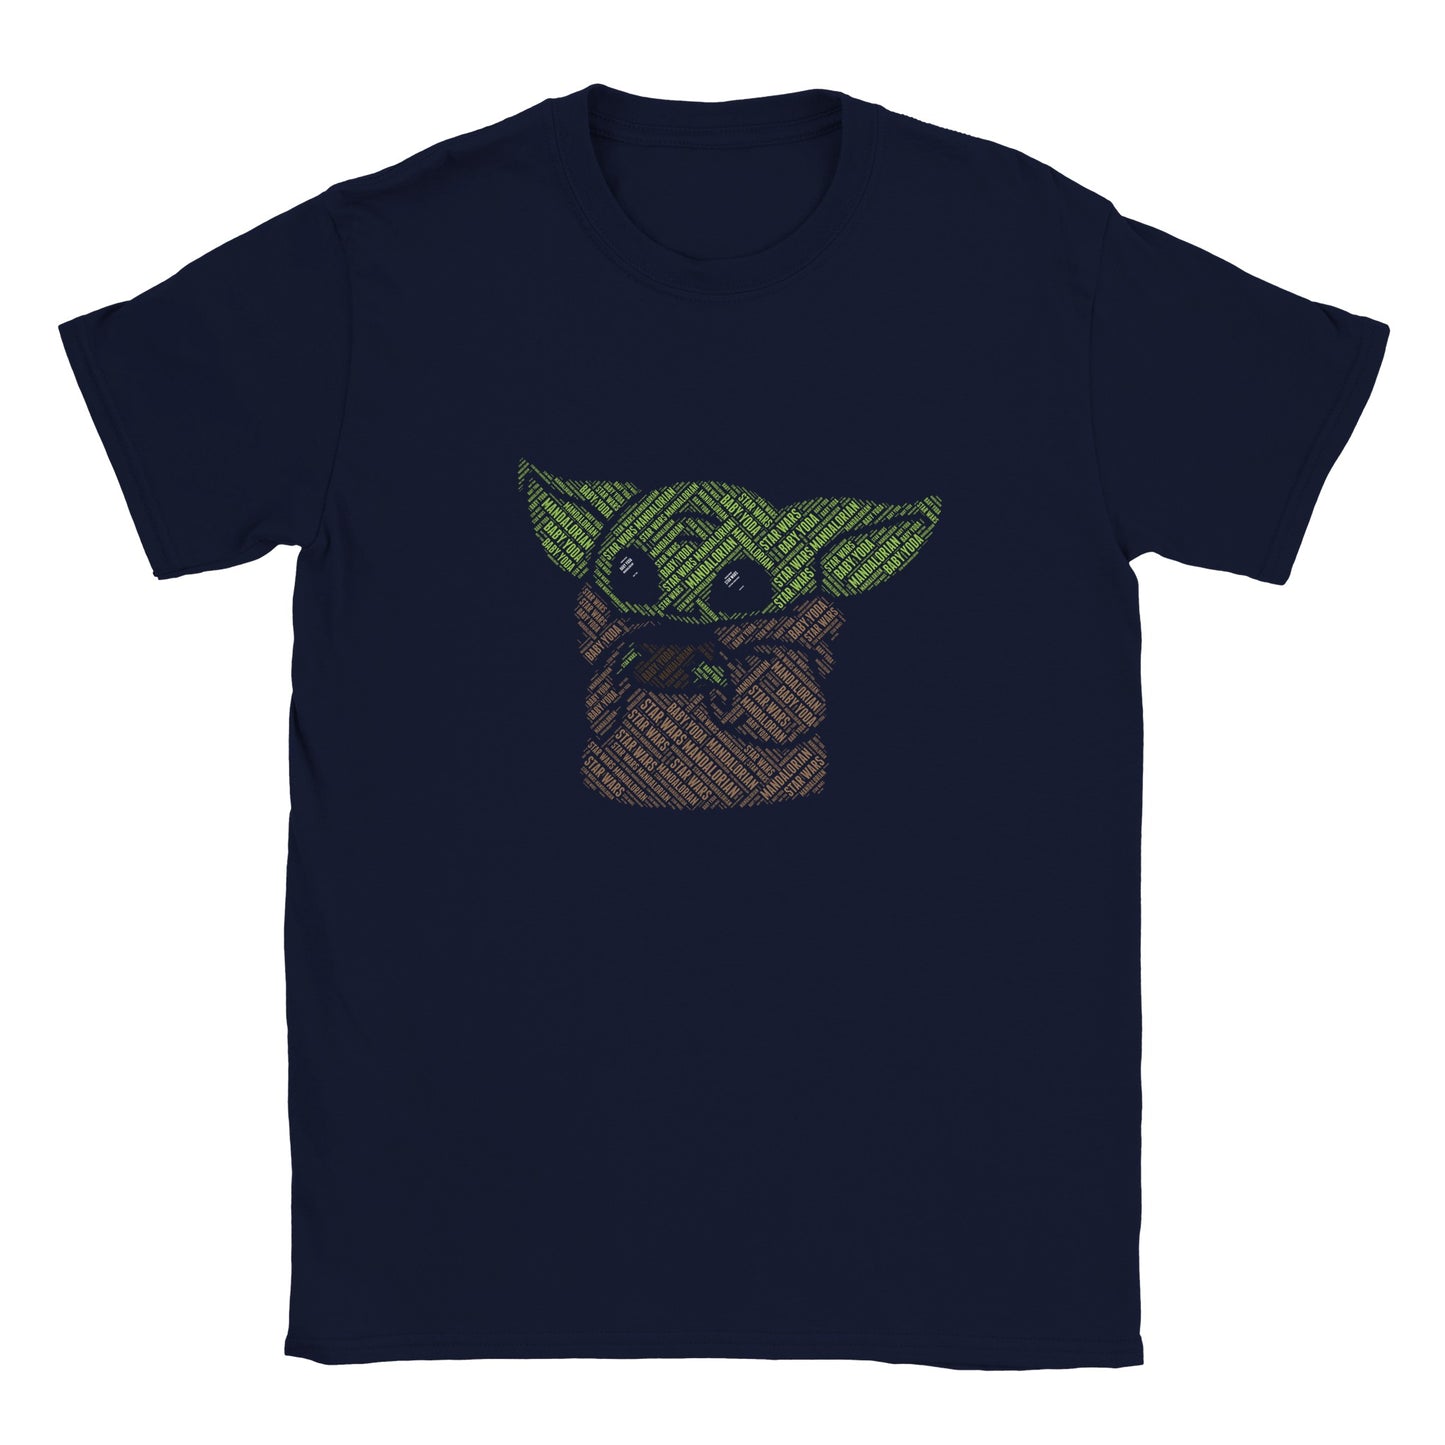 Artwork Kinder-T-Shirt – Baby Yoda Kalligram Artwork – klassisches Kinder-T-Shirt 